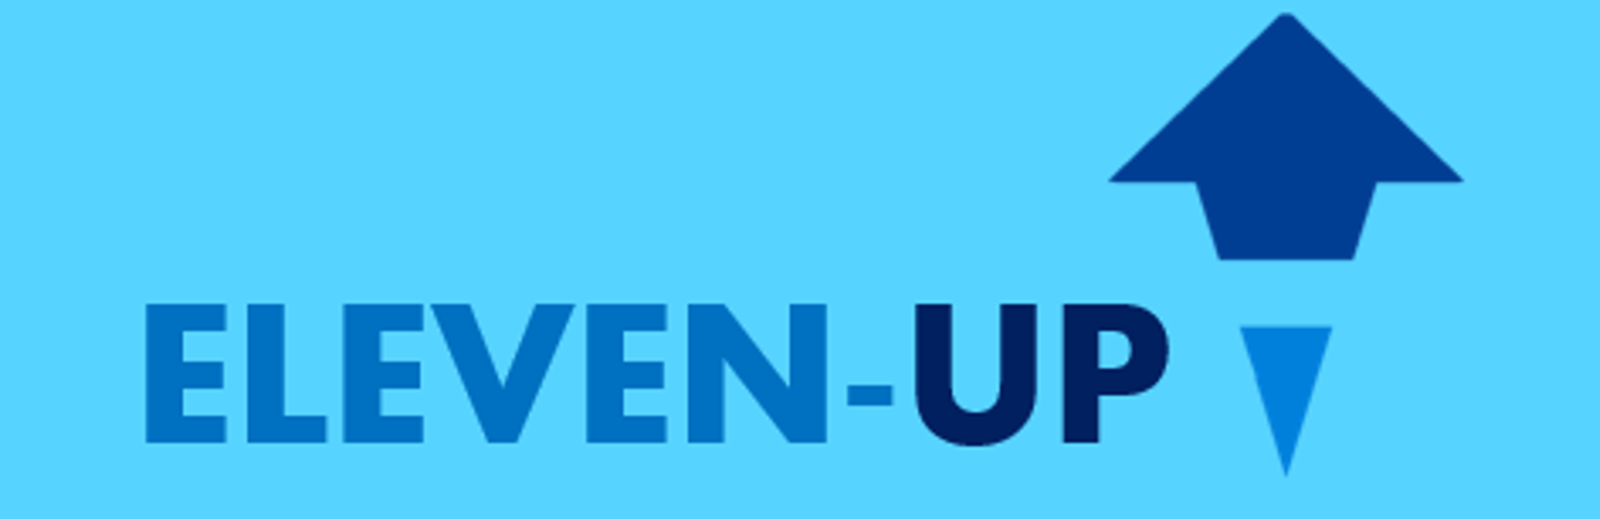 Eleven-Up logo